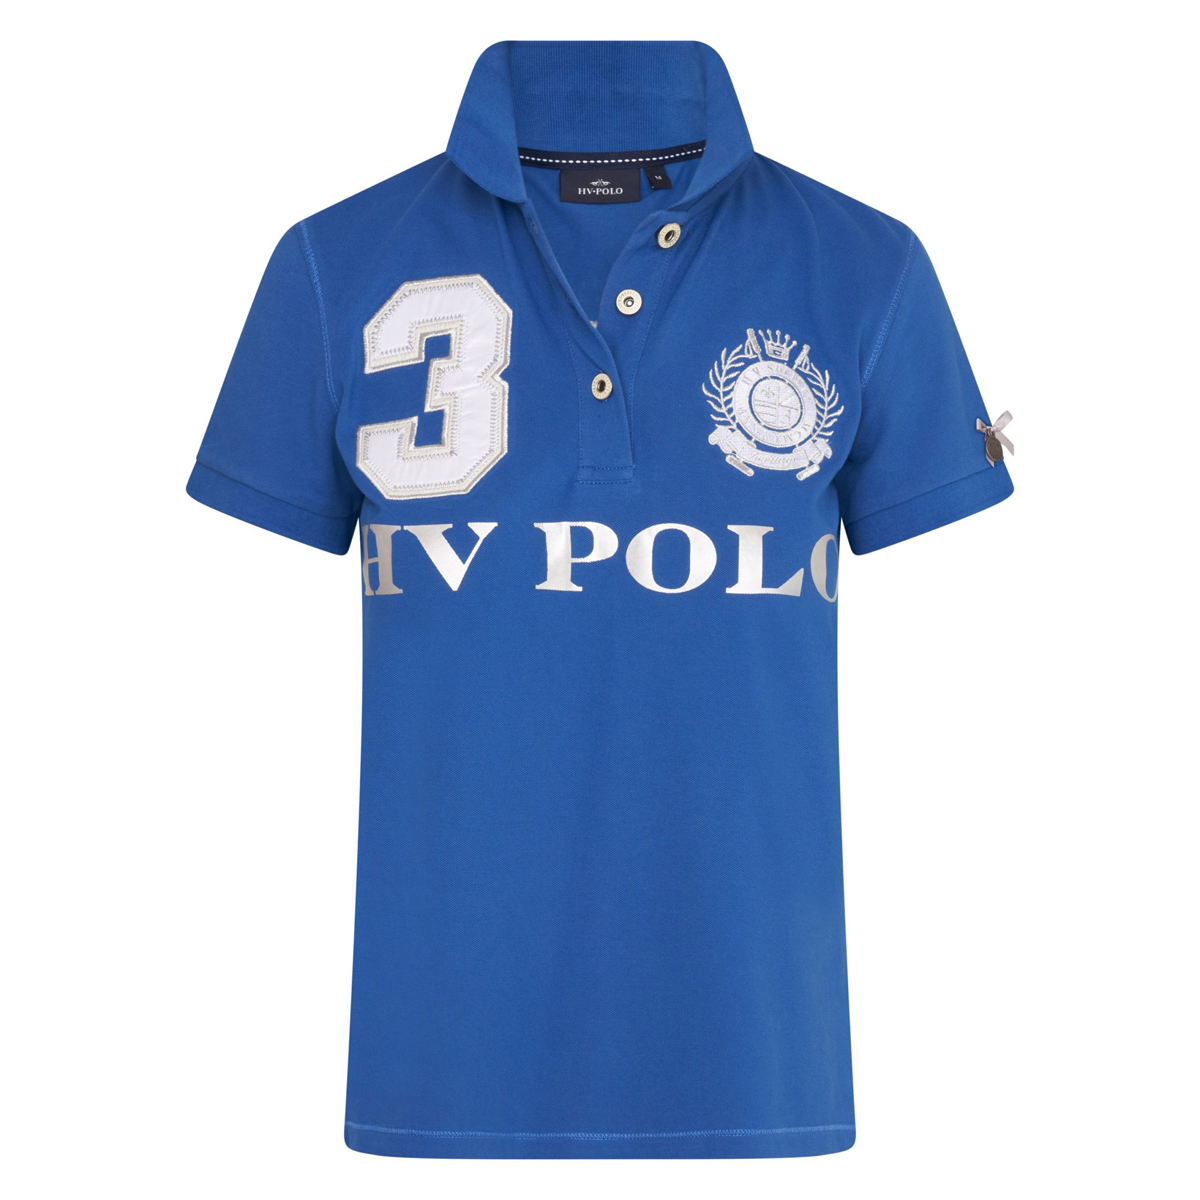 Polo Hv Polo Favouritas Eq Blauw-wit, S in blauw/wit